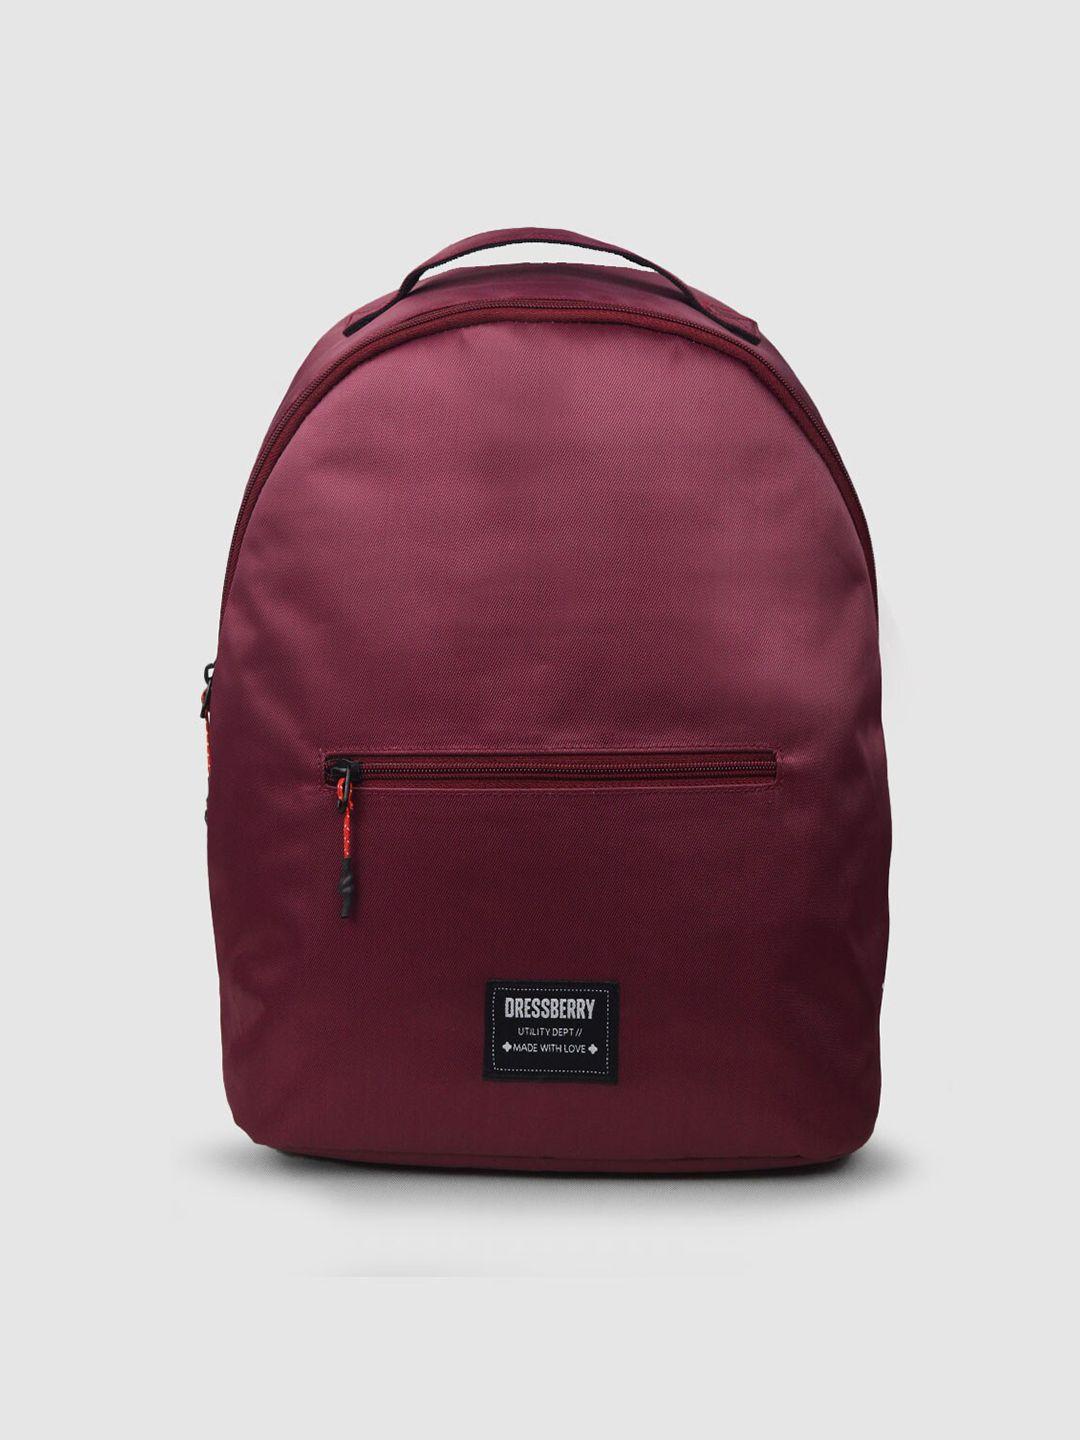 dressberry women maroon small backpack